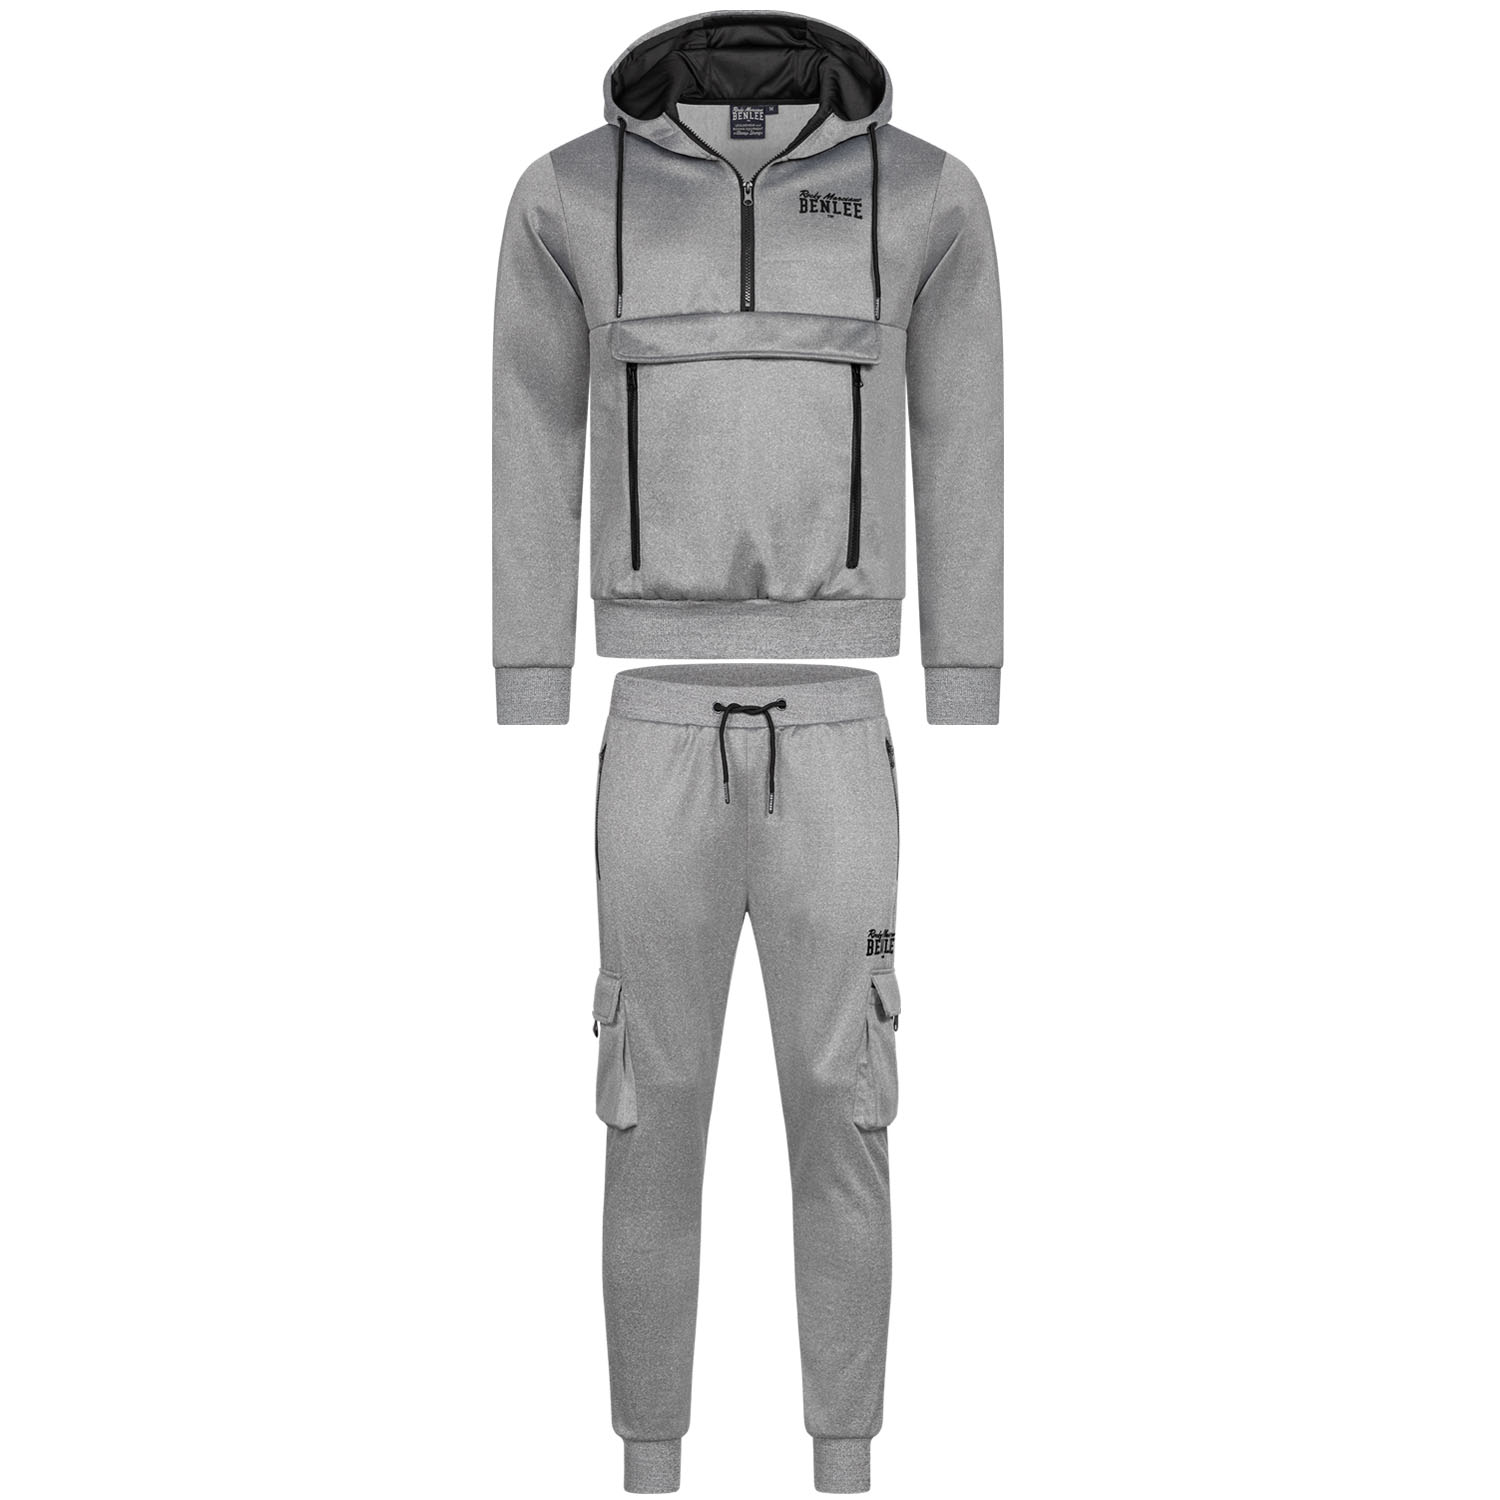 BENLEE Jogging Suit, Moorpark, grey